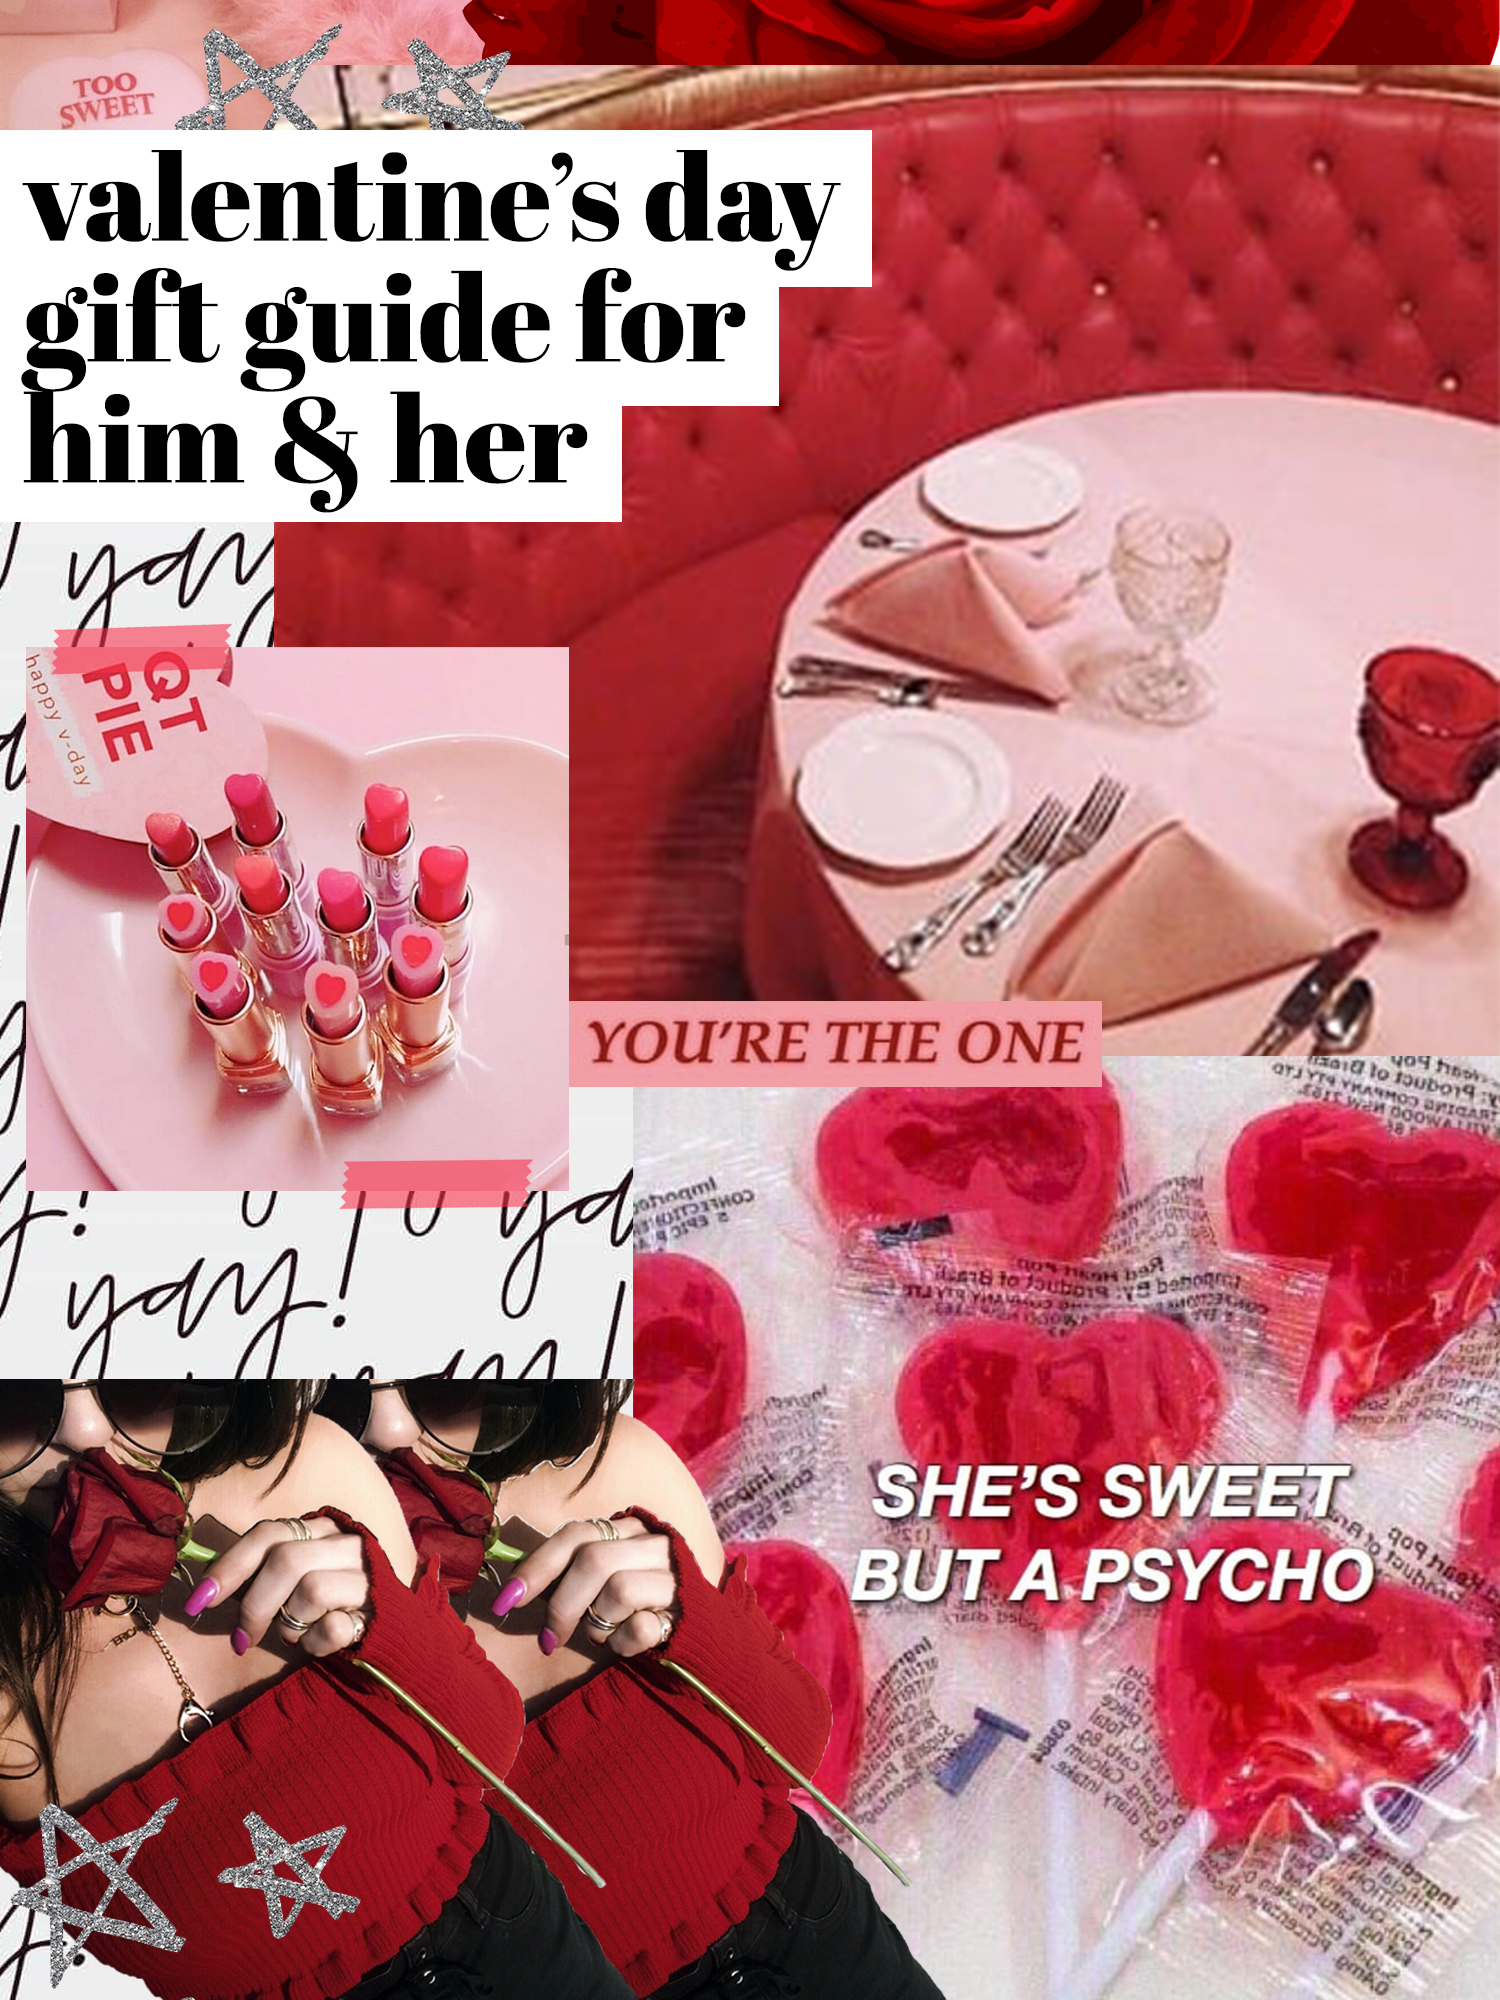 2019 valentines day gift guide, fashionlush, him & her, amazon